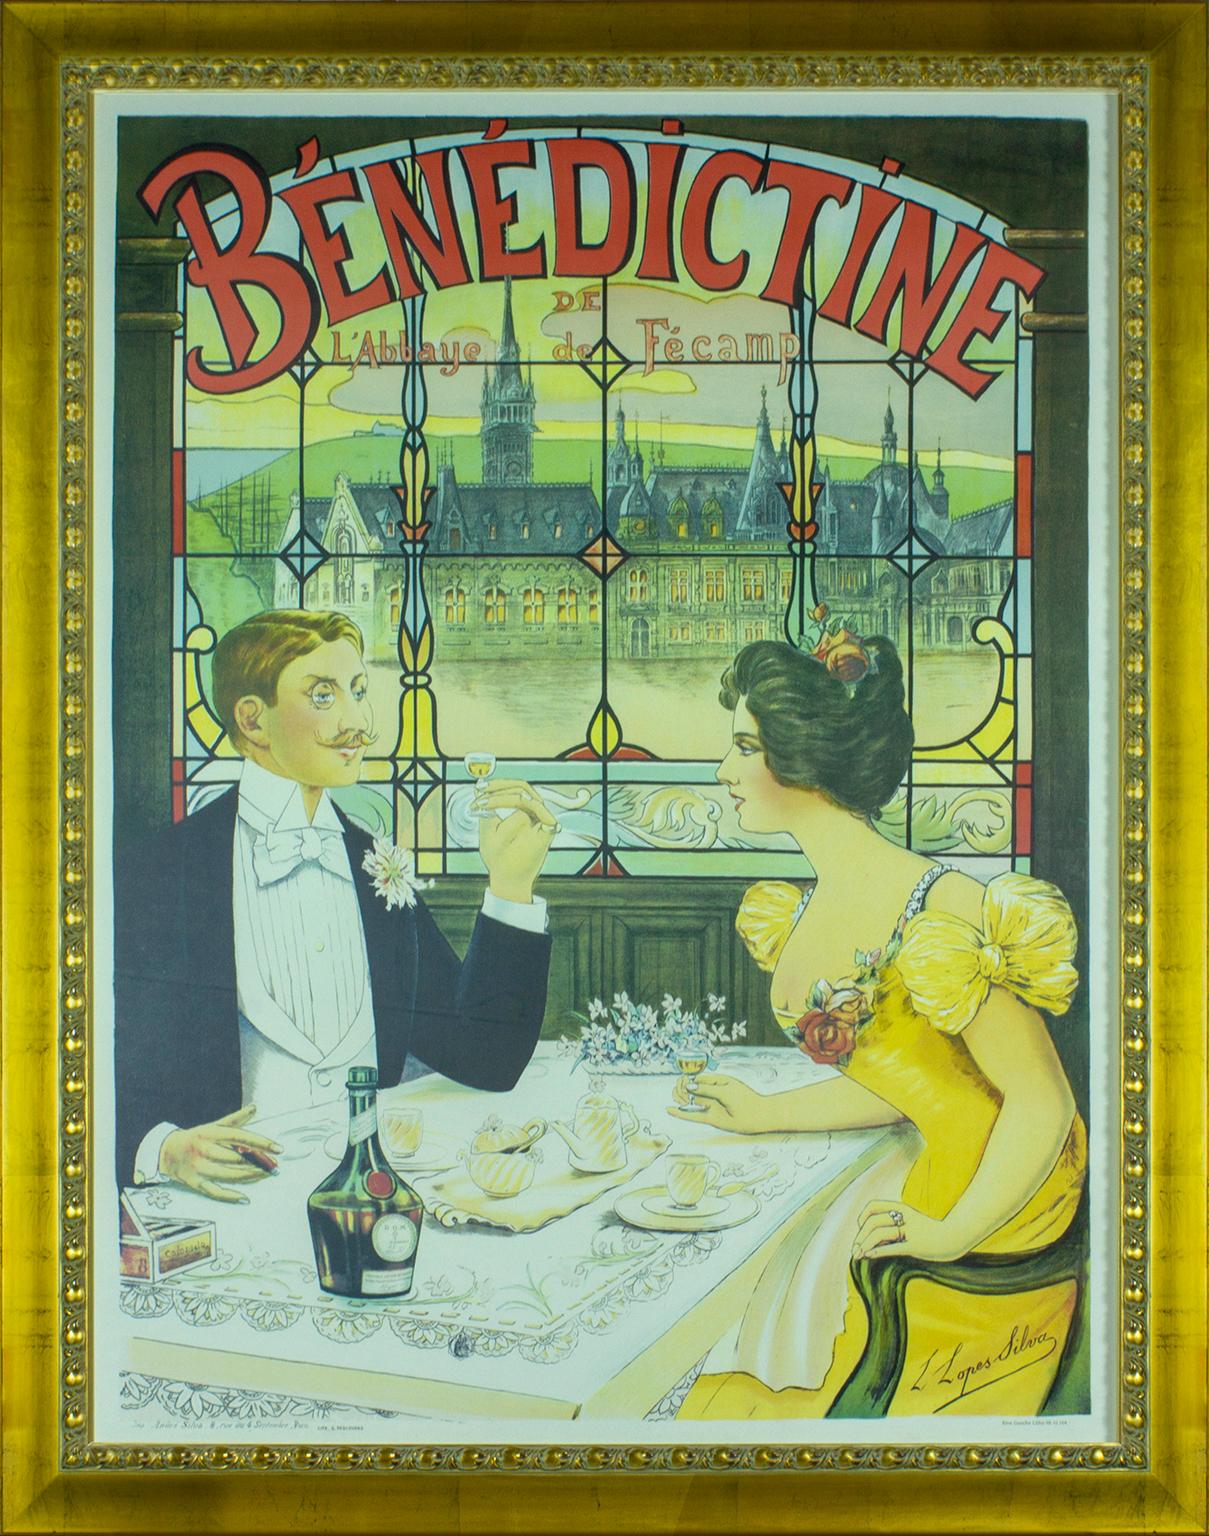 Lucien Lopes Silva Portrait Print - "Bénédictine" original 1898 advertising poster by Lucian Lopes Silva